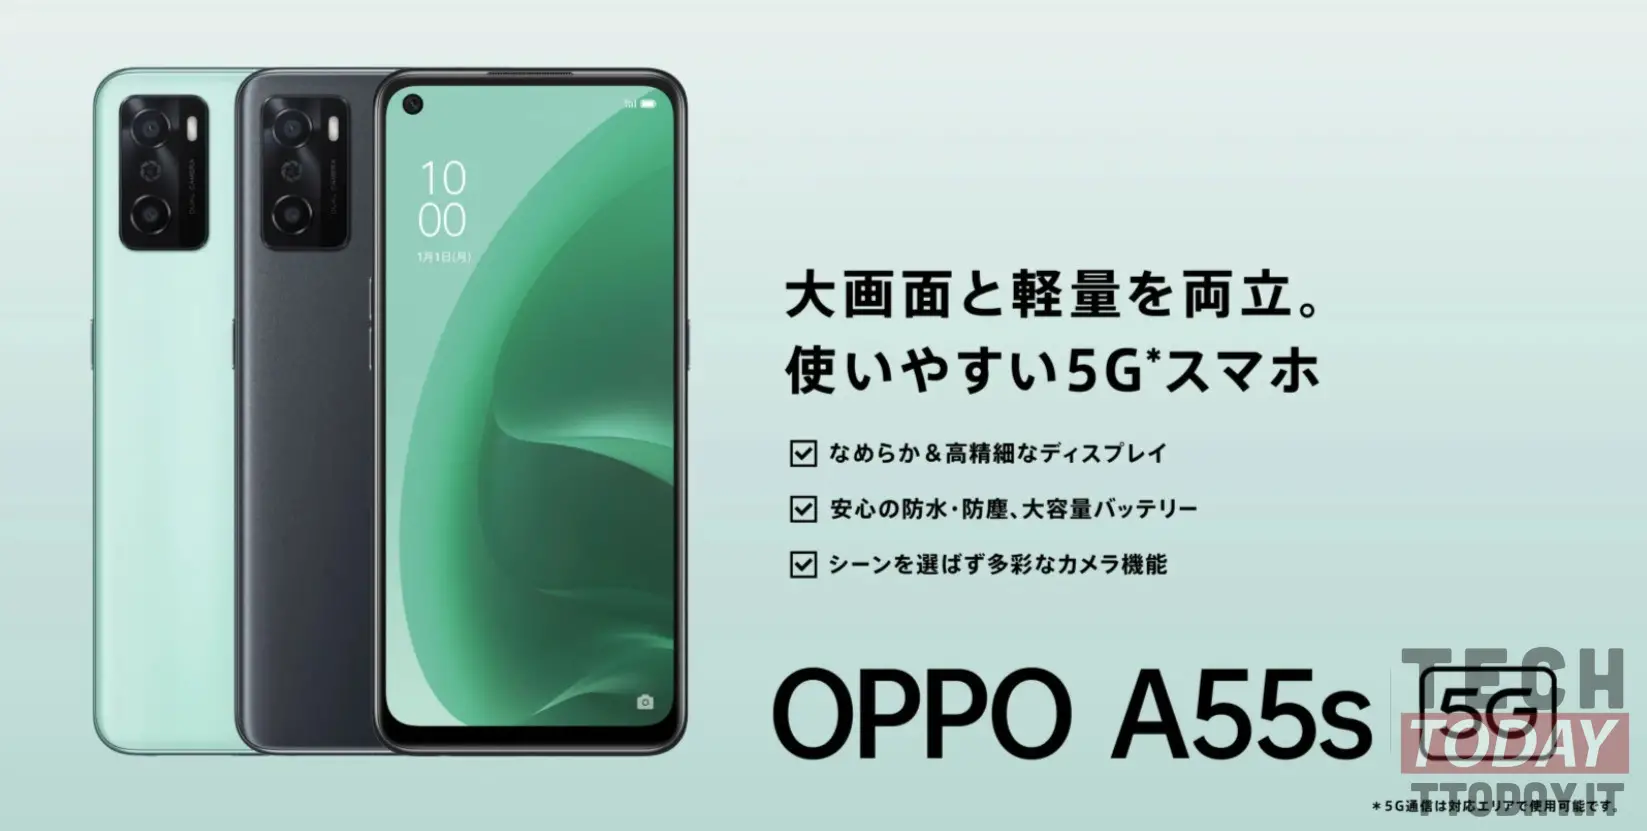 OPX A55s